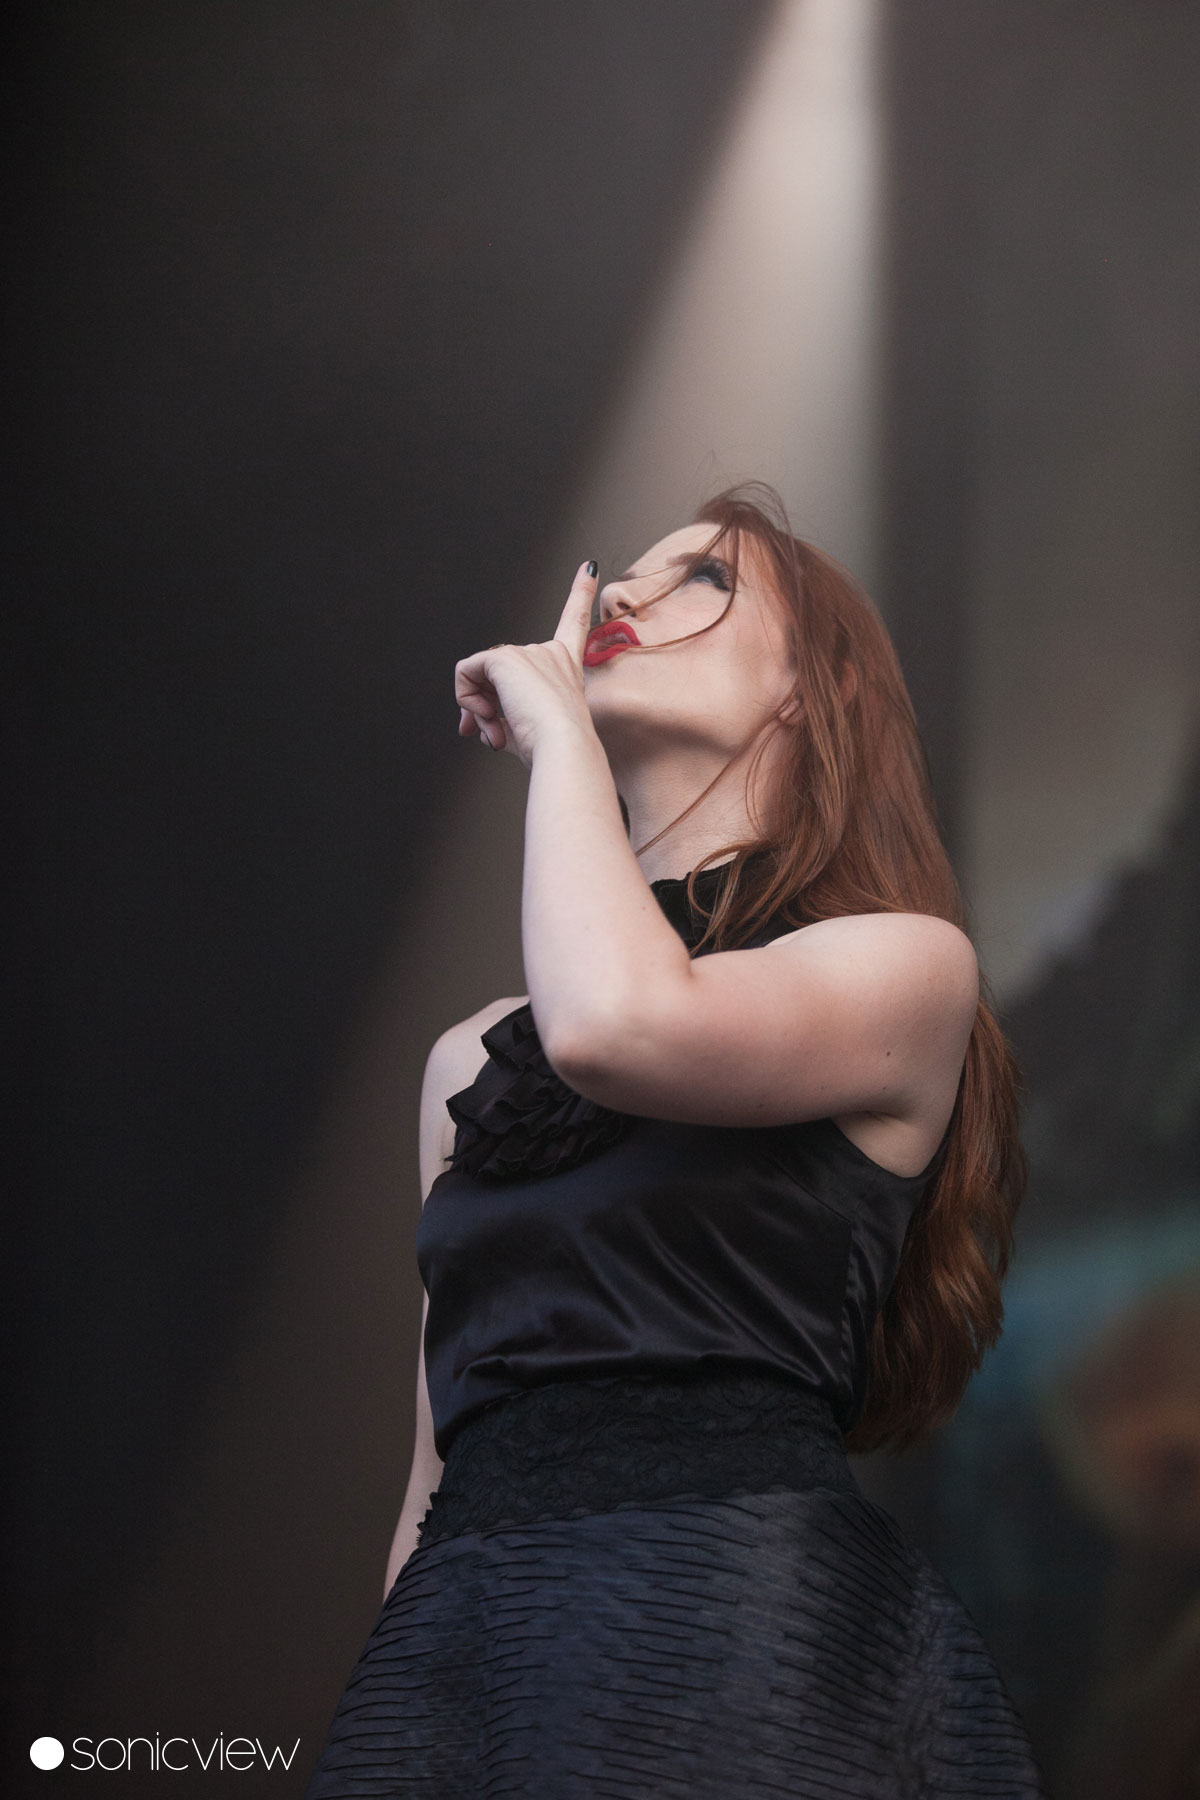 Epica: Live at Copenhell 2016, Denmark